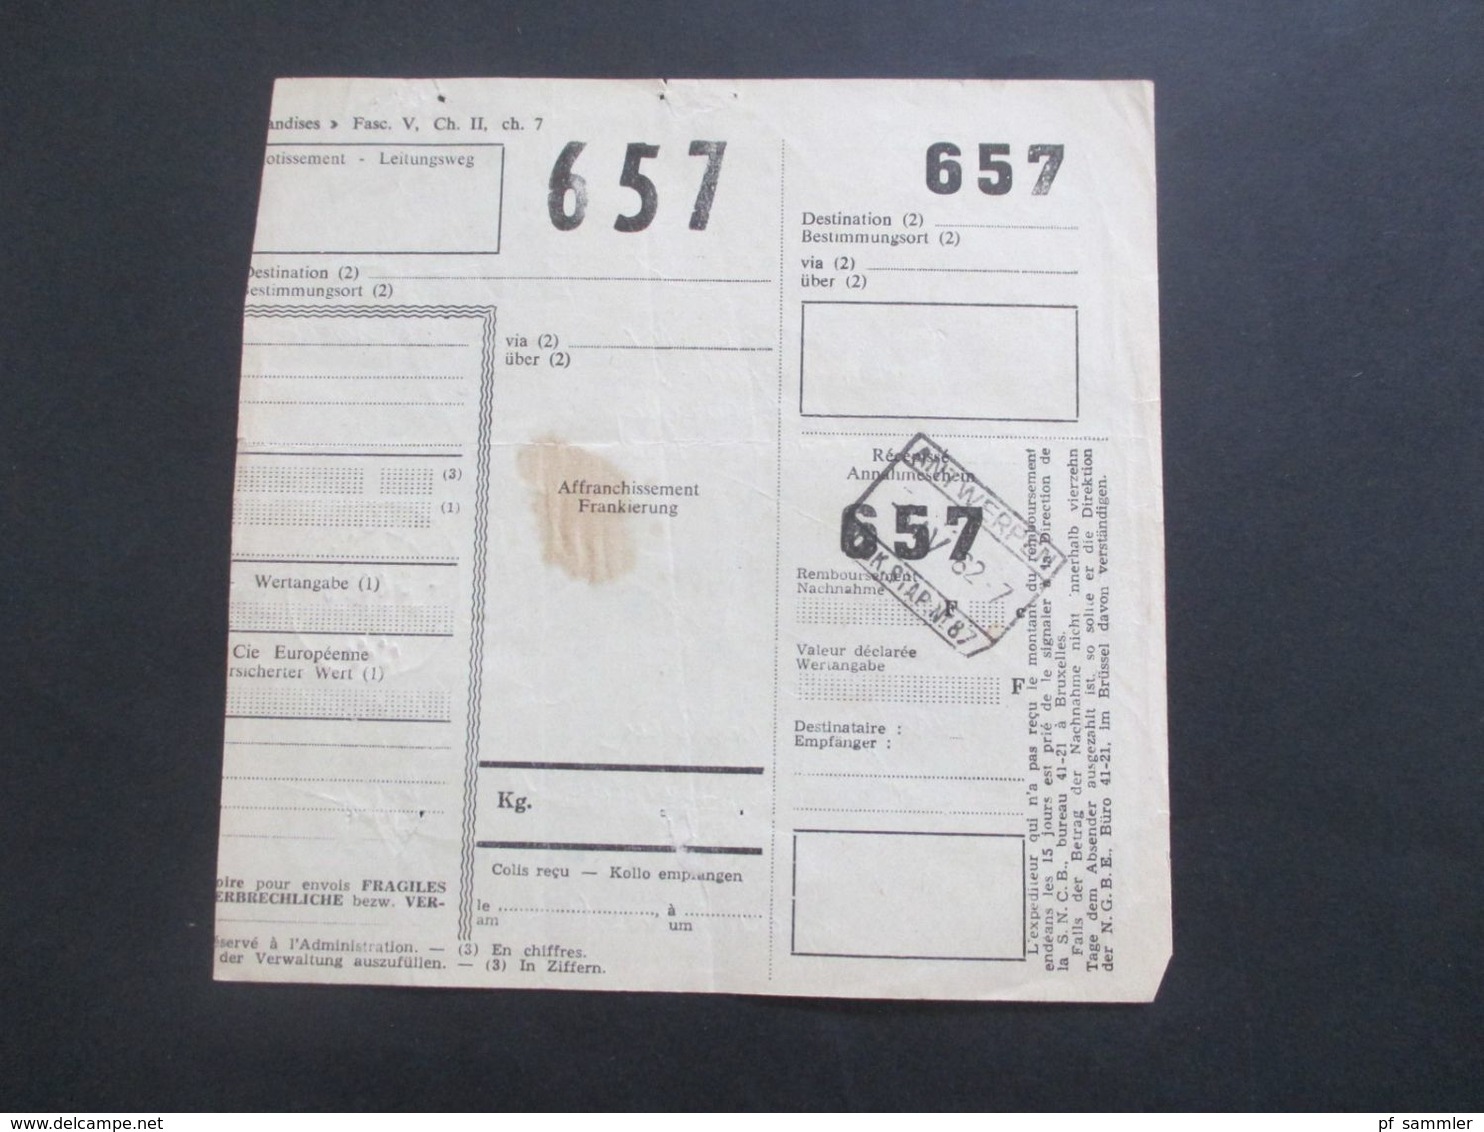 Belgien 1962 / 63 Bahnpost / Paketkarten 26 Stk. verschiedene Stempel / Stöberposten